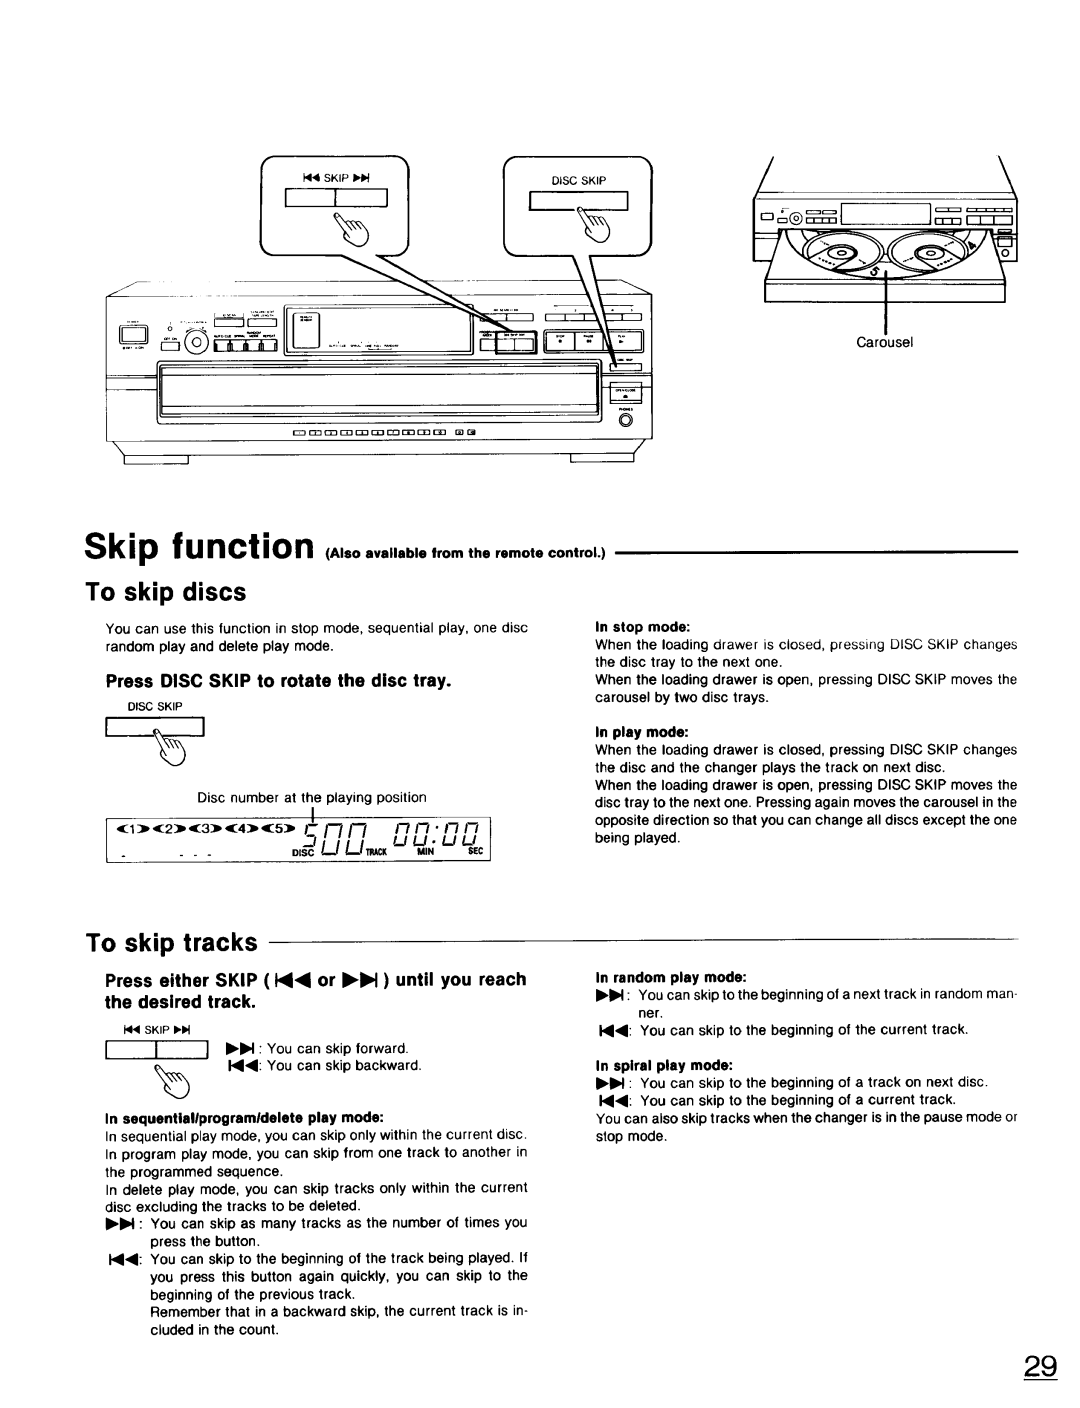 Technics SL-PD947 To skip discs, To skip tracks, Press DISC SKIP to rotate the disc tray, 1, .... 234,5, I- T / /-7 